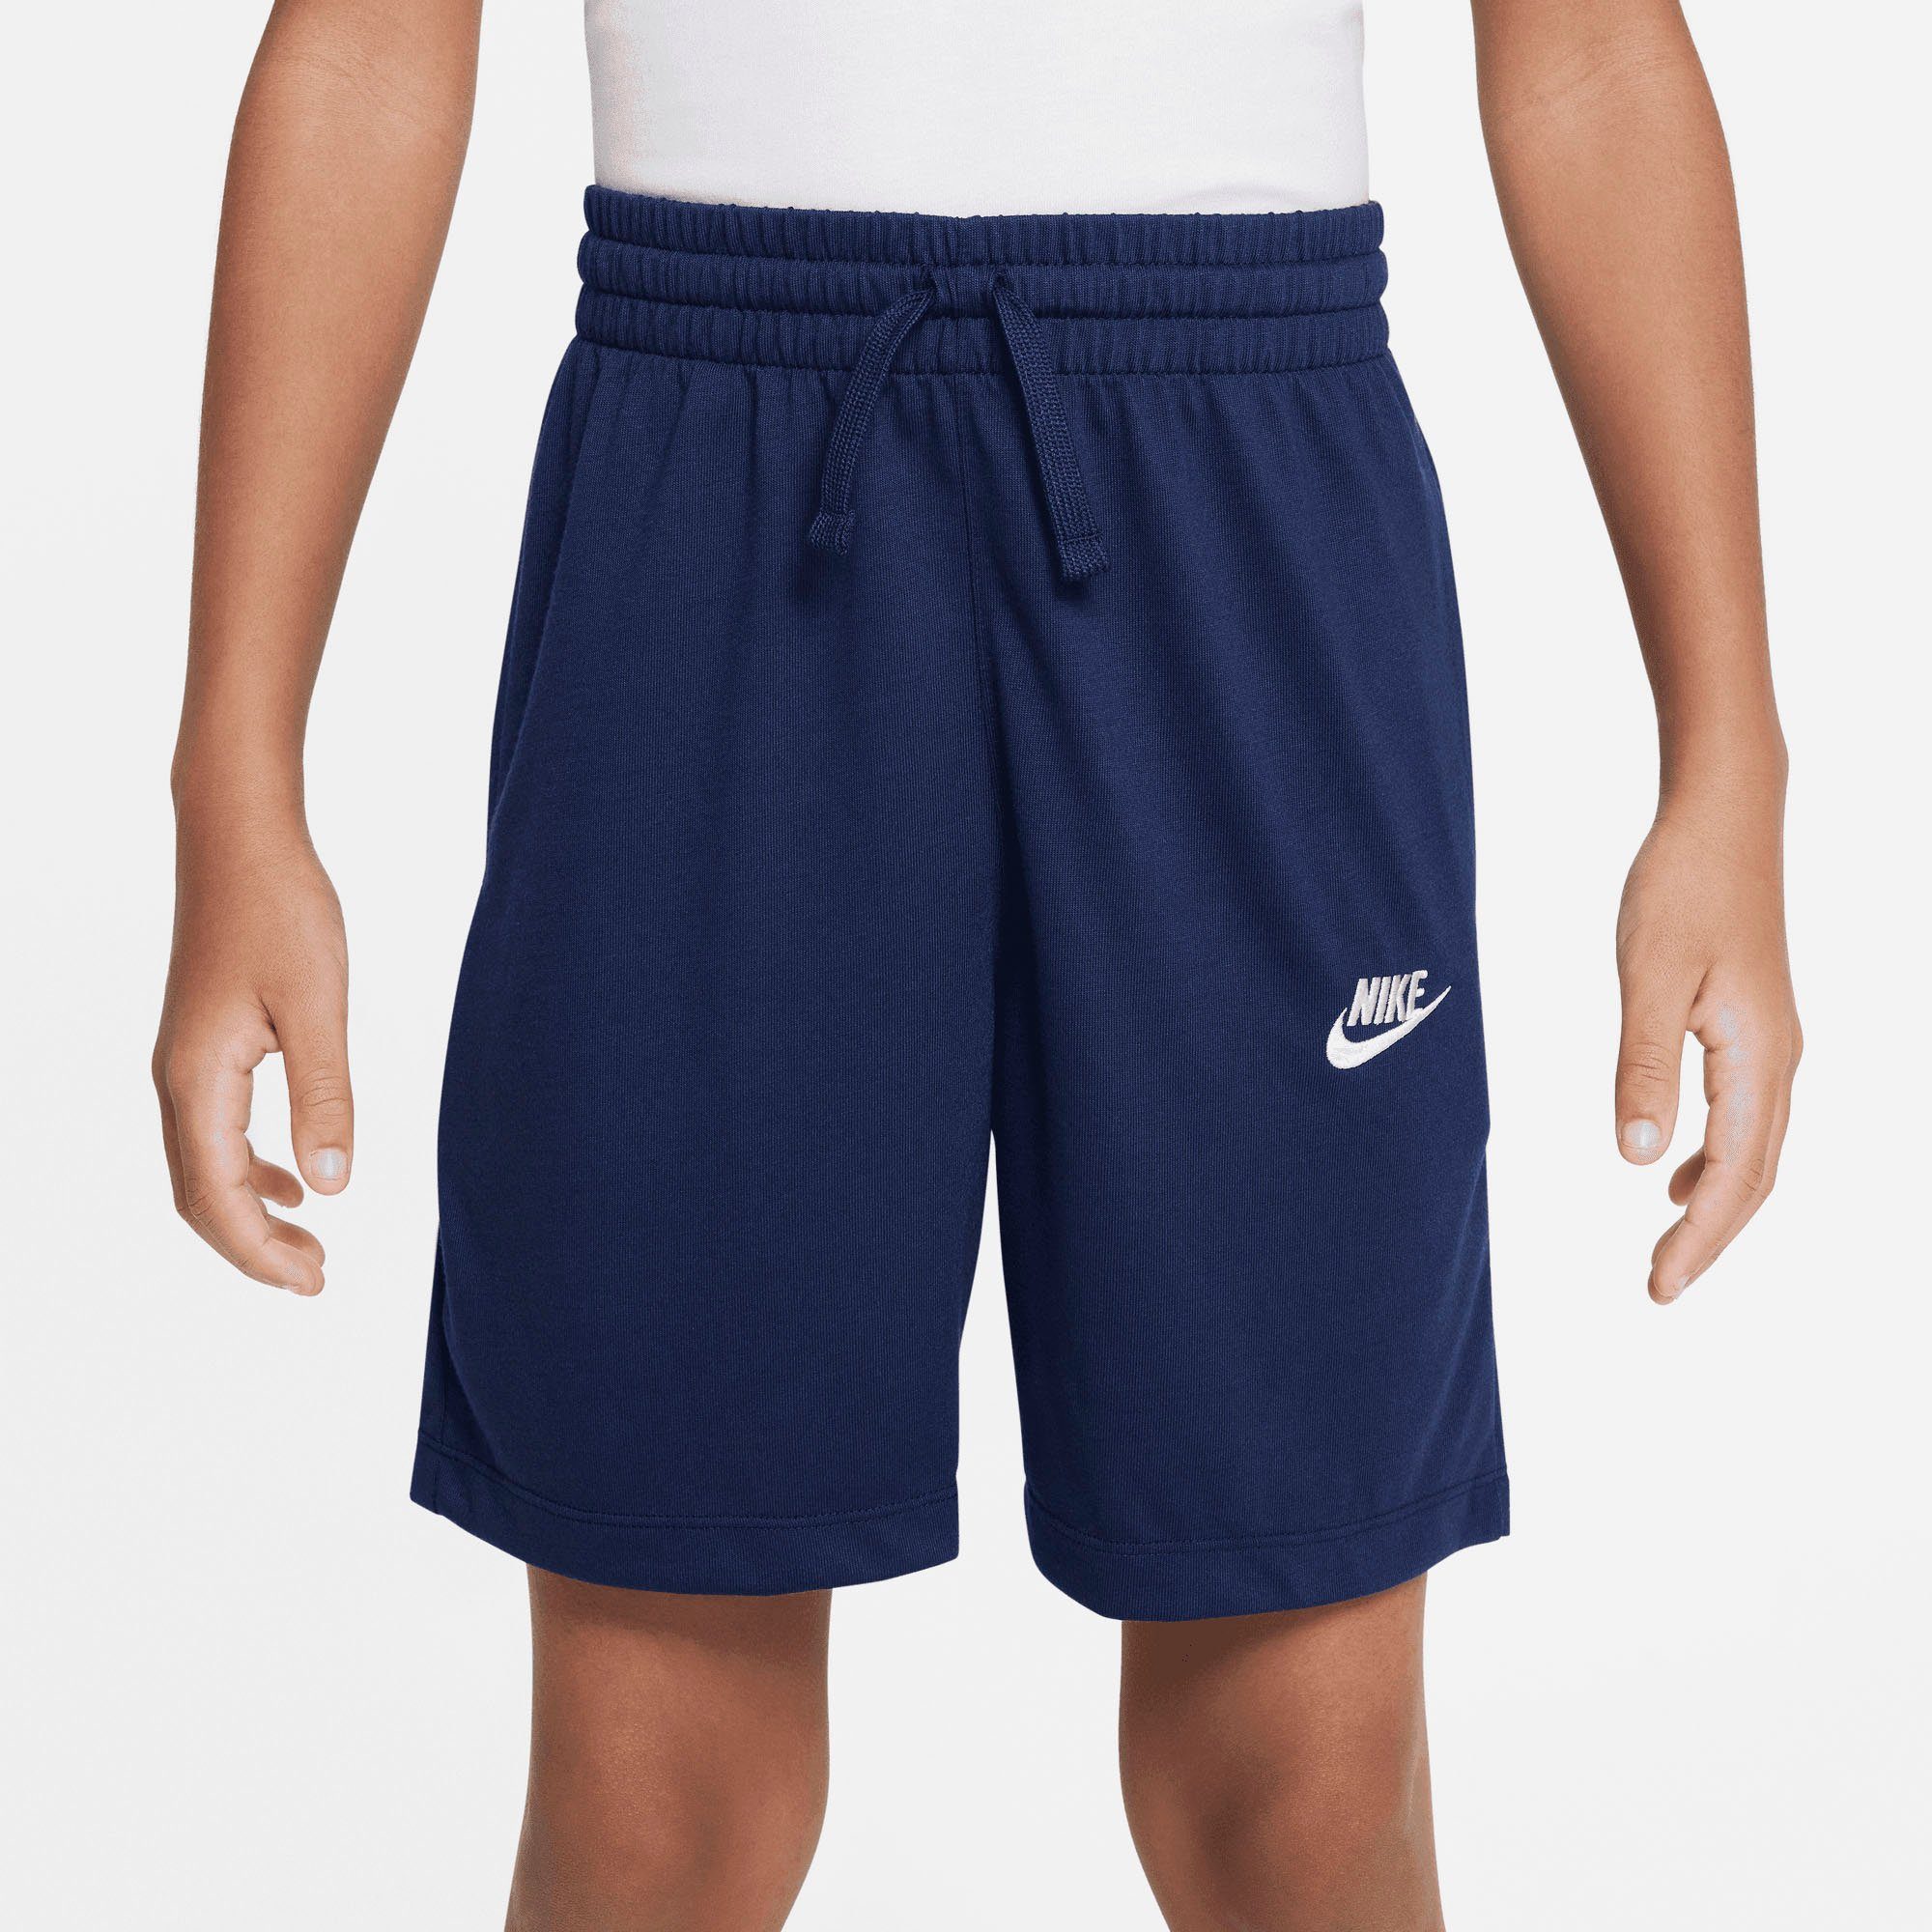 (BOYS) JERSEY Sportswear Shorts Nike KIDS' blau BIG SHORTS